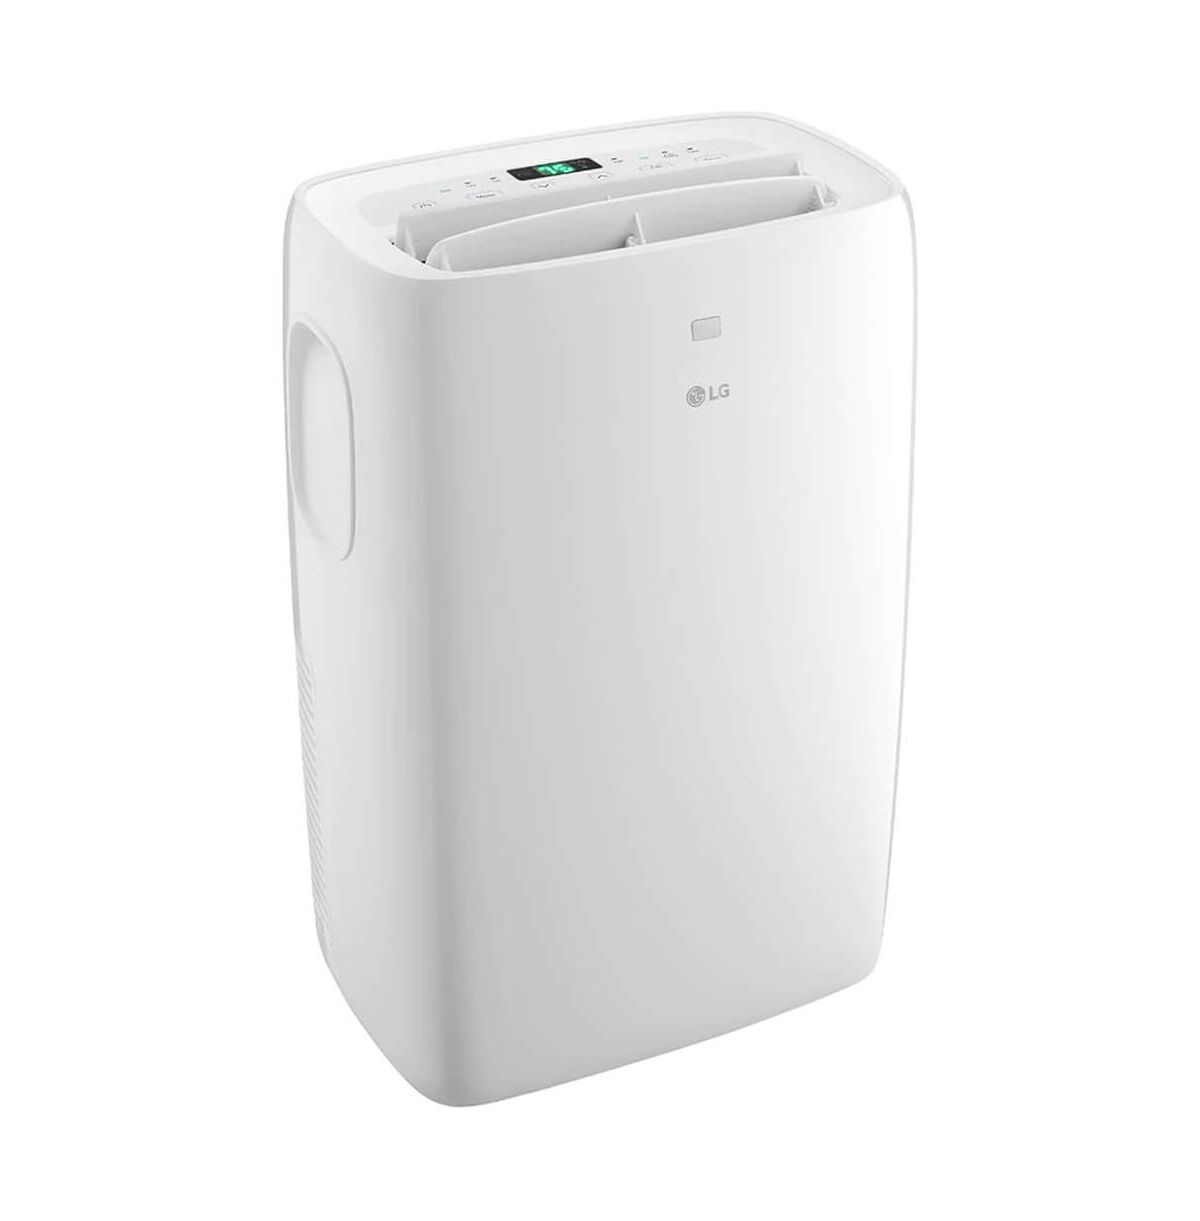 LG 6,000 Btu Portable Air Conditioner - White